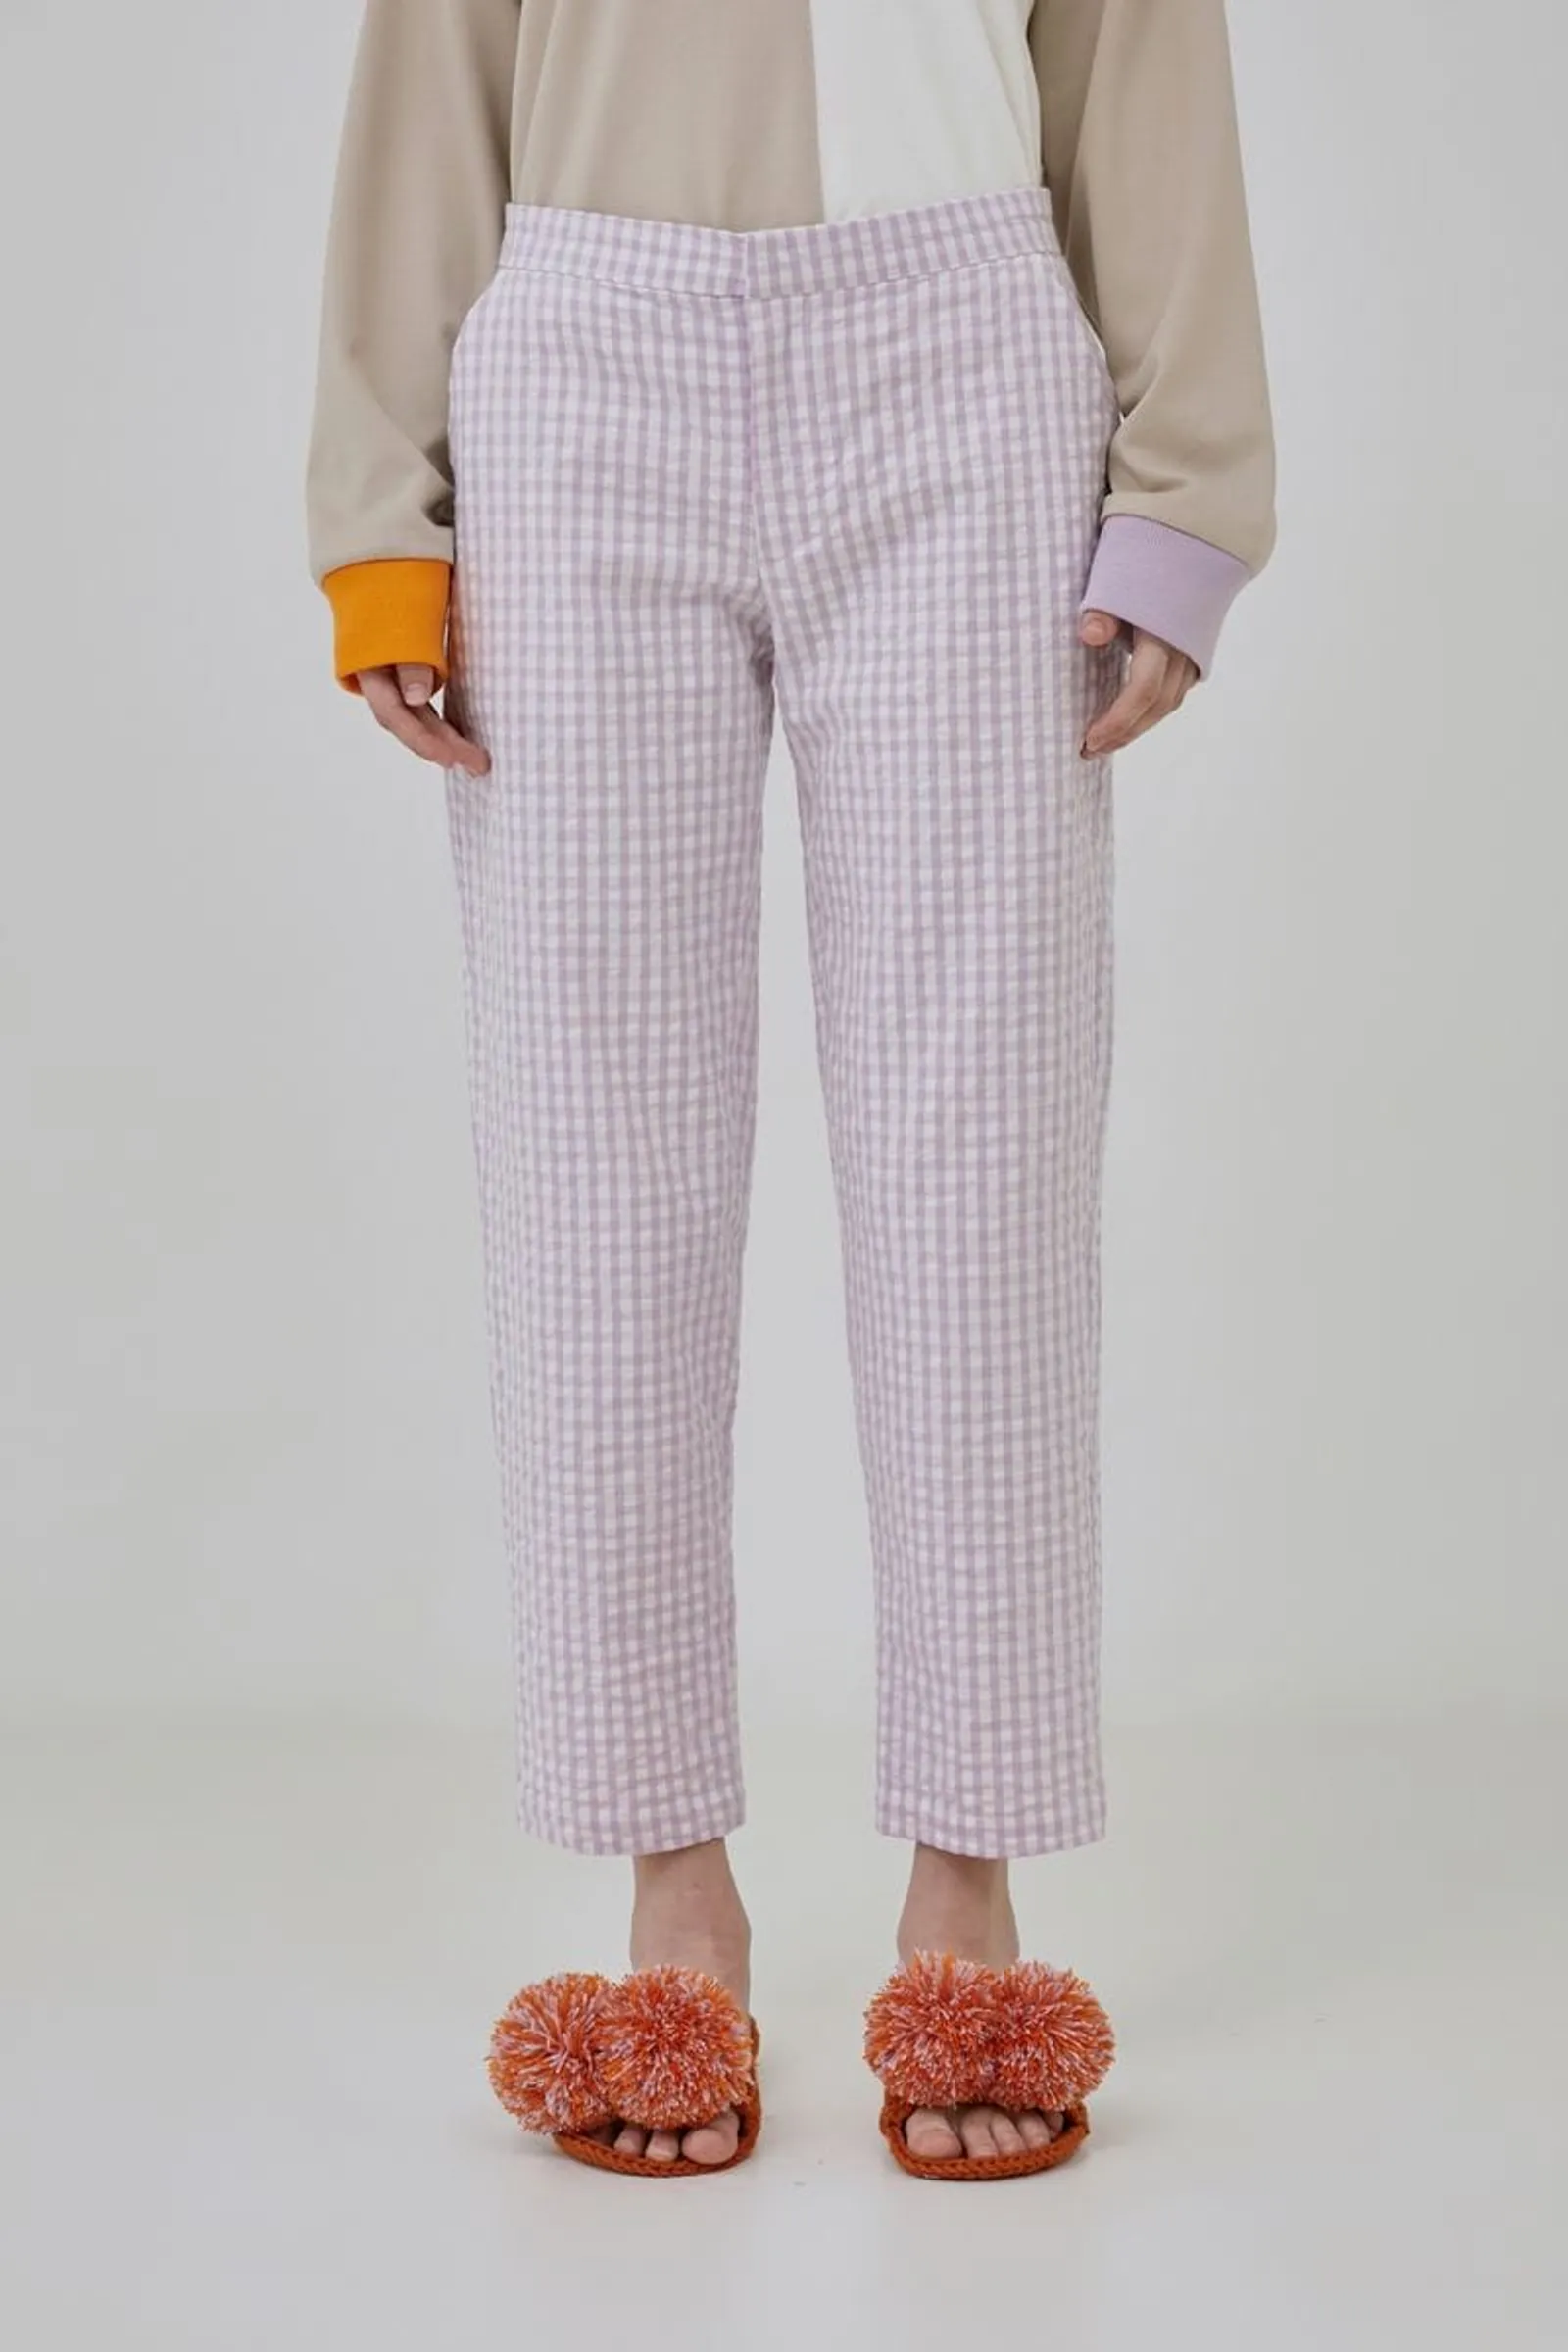 #PopbelaOOTD: Rekomendasi Outfit Serba Lilac dari Brand Lokal